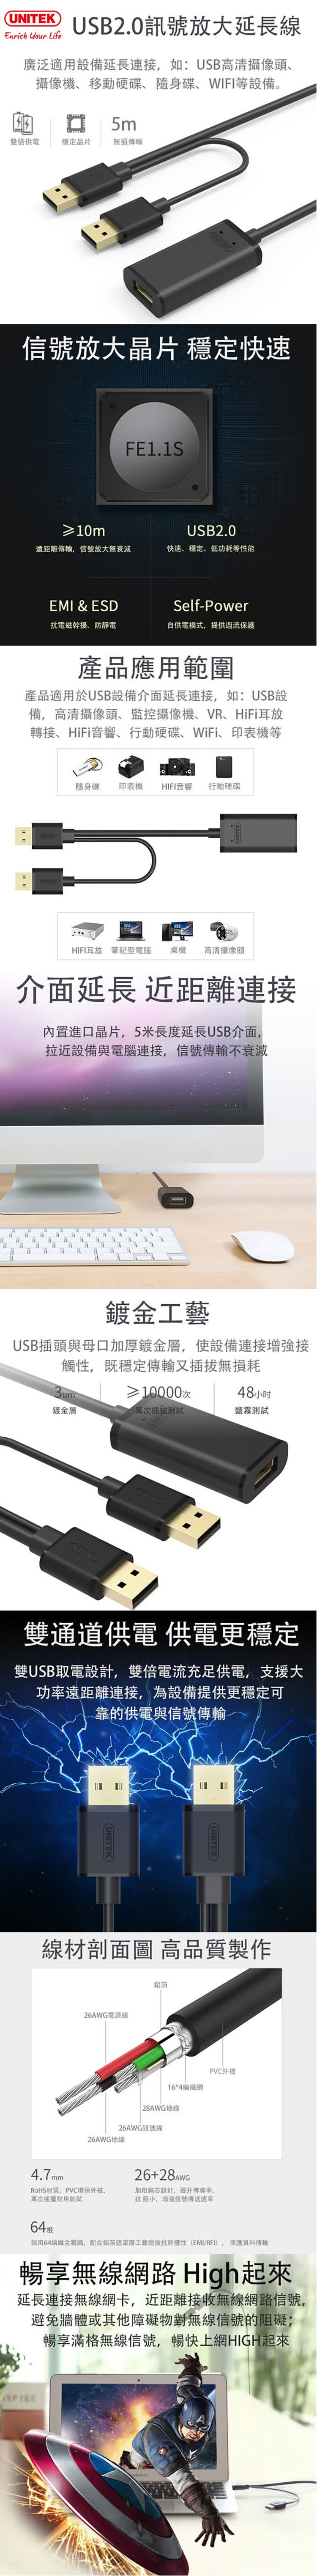 UNITEK-Y-277-USB-2.jpg